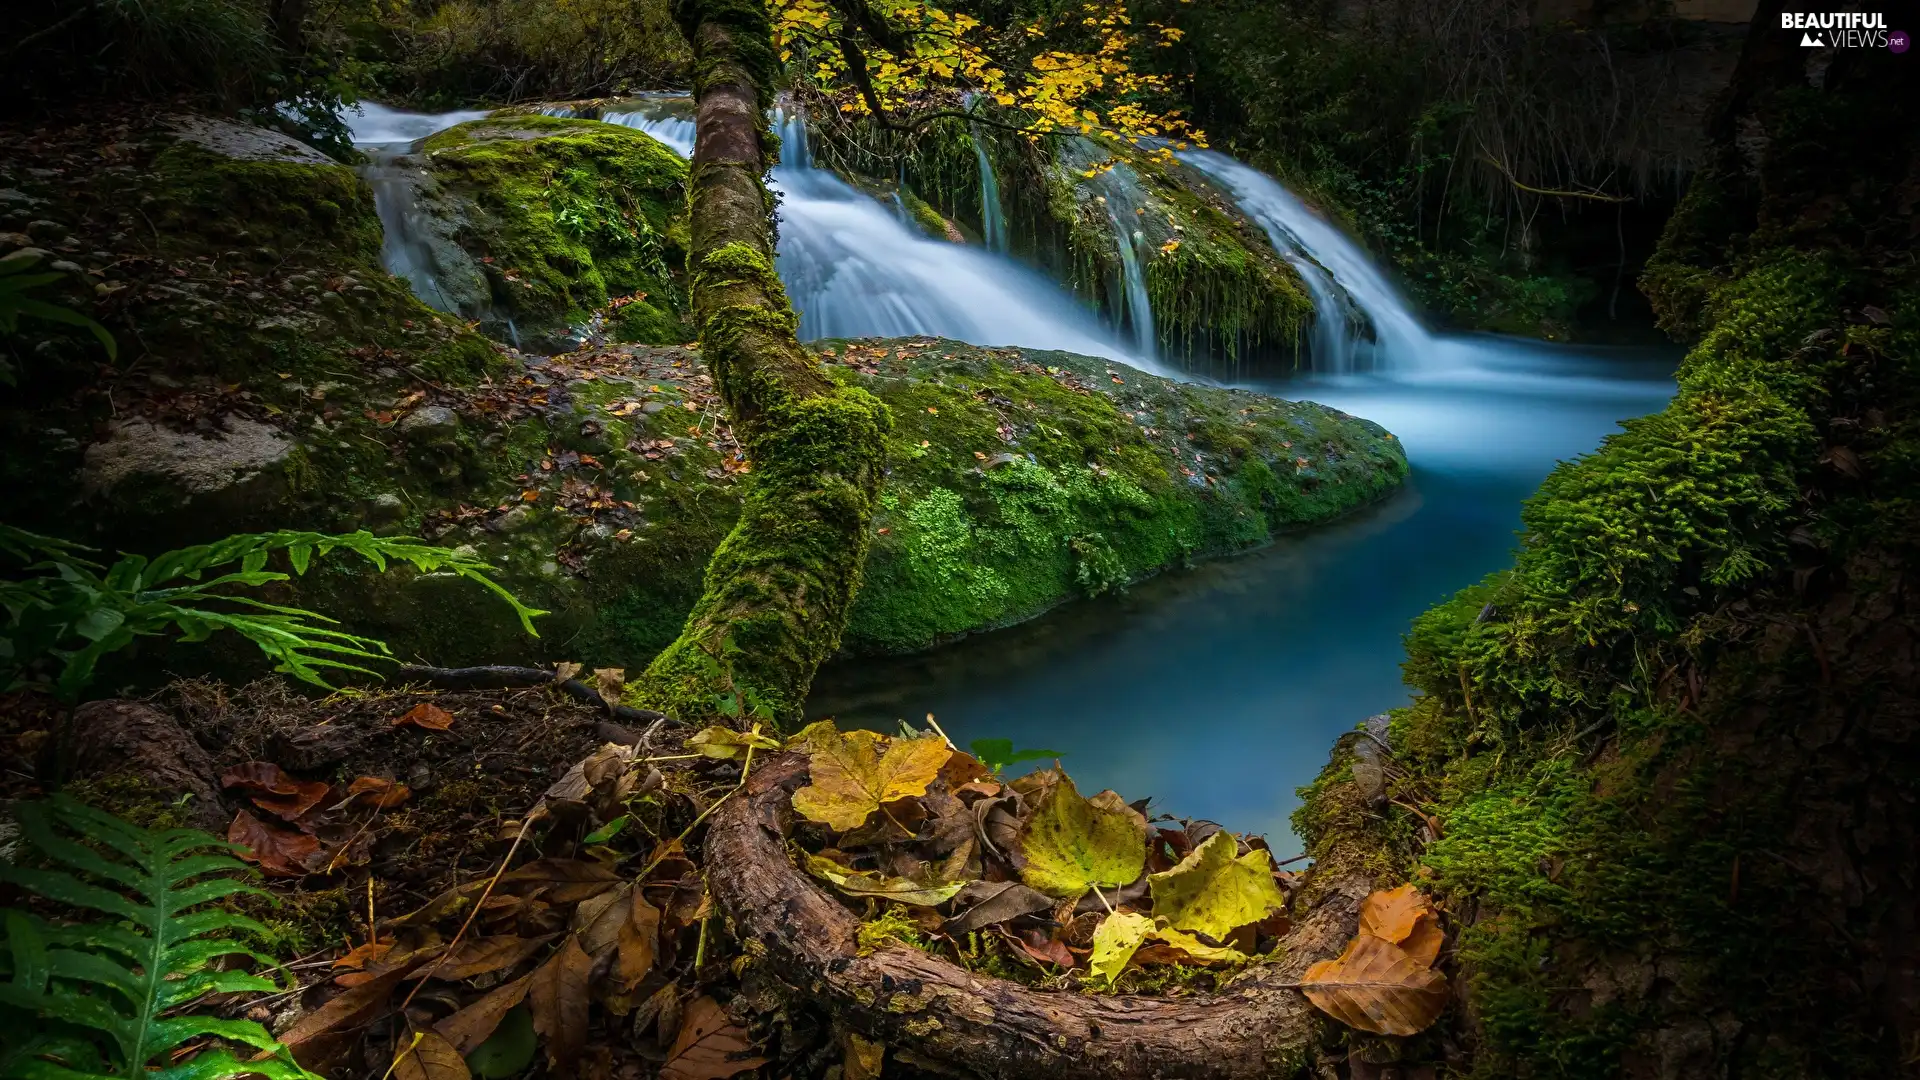 River, autumn, Rocks, Leaf, Mossy, waterfall